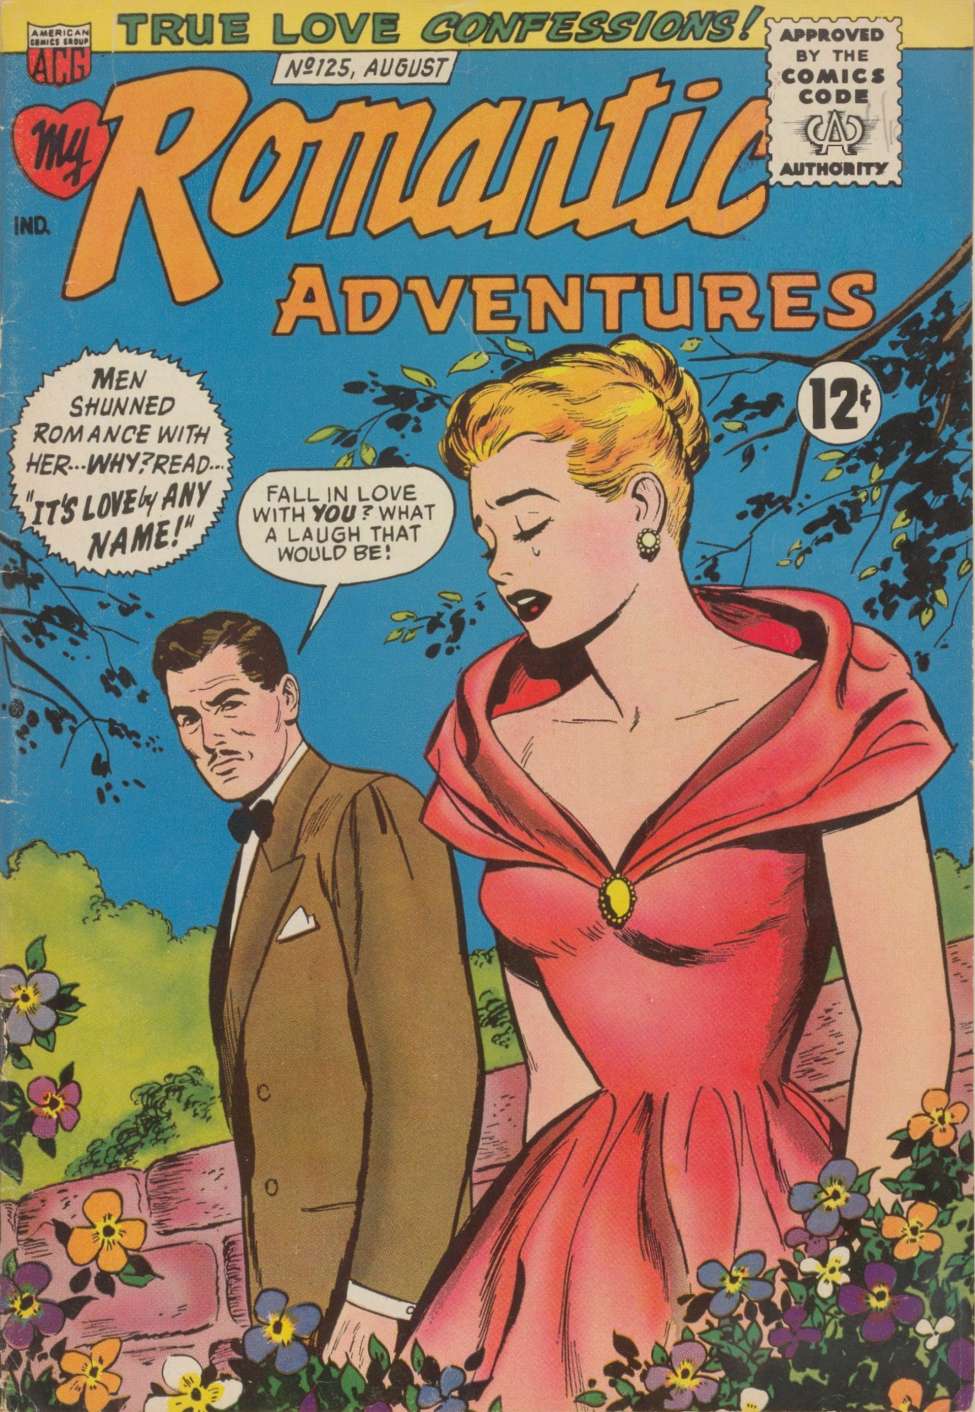 Adventures romance. Комиксы семидесятых разные. 1950'S Adventures Romantic Comics. My Romance. Comic lover's quarrel 2.